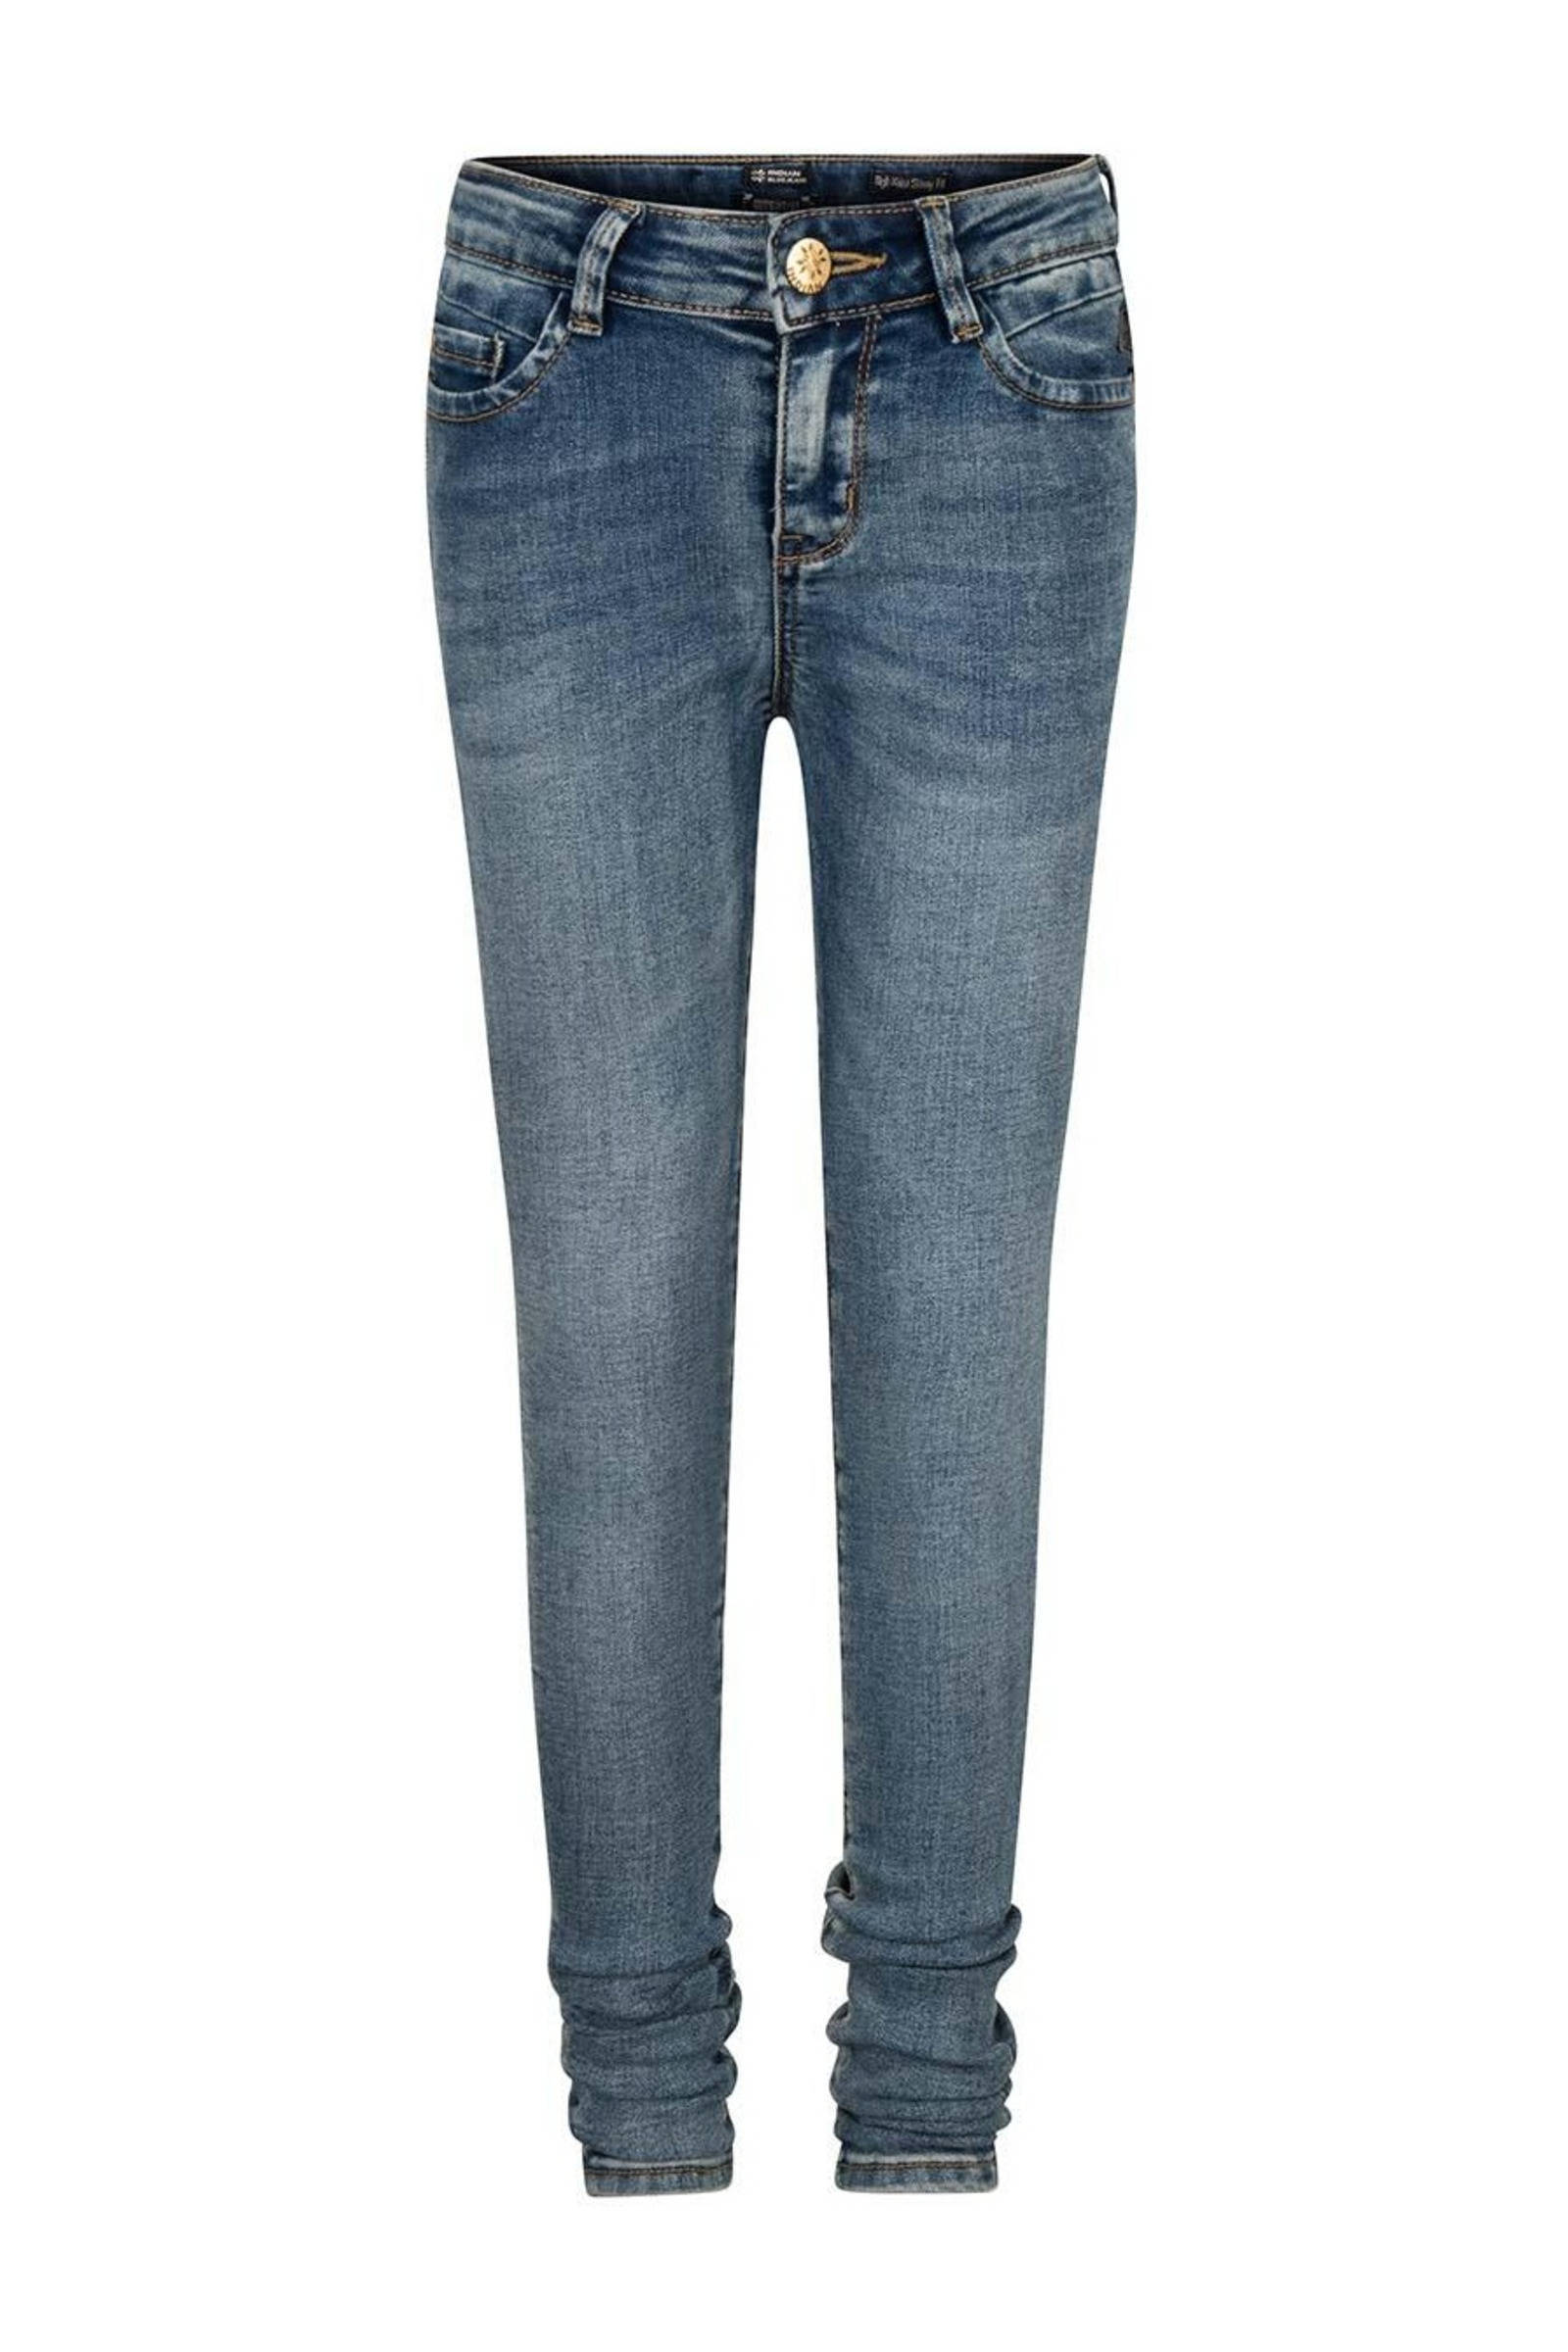 Indian Blue Jeans high waist skinny jeans Lois blue online kopen